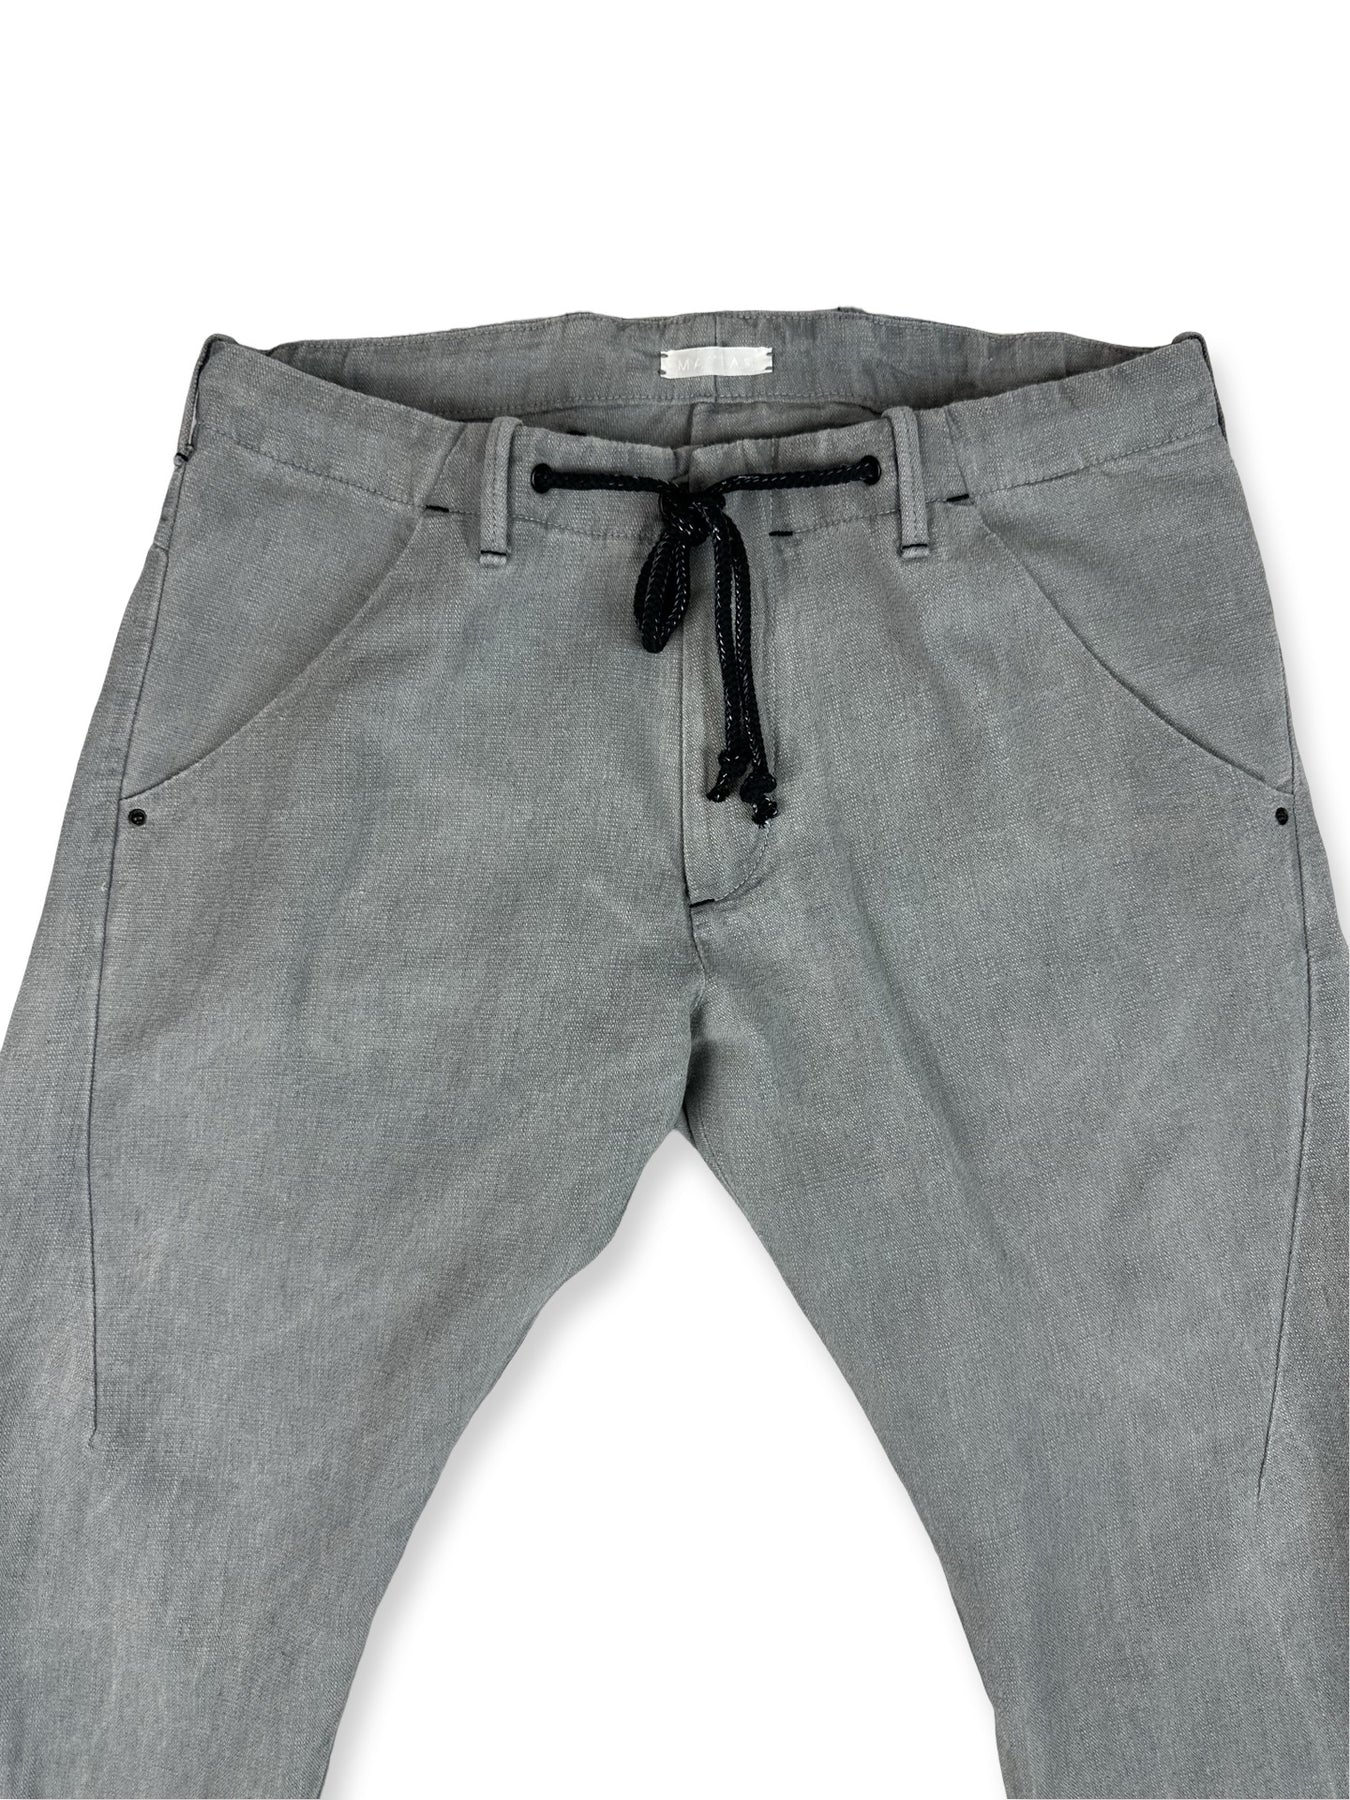 MATIAS Rivera Tenshi Vidrio Men's Trouser